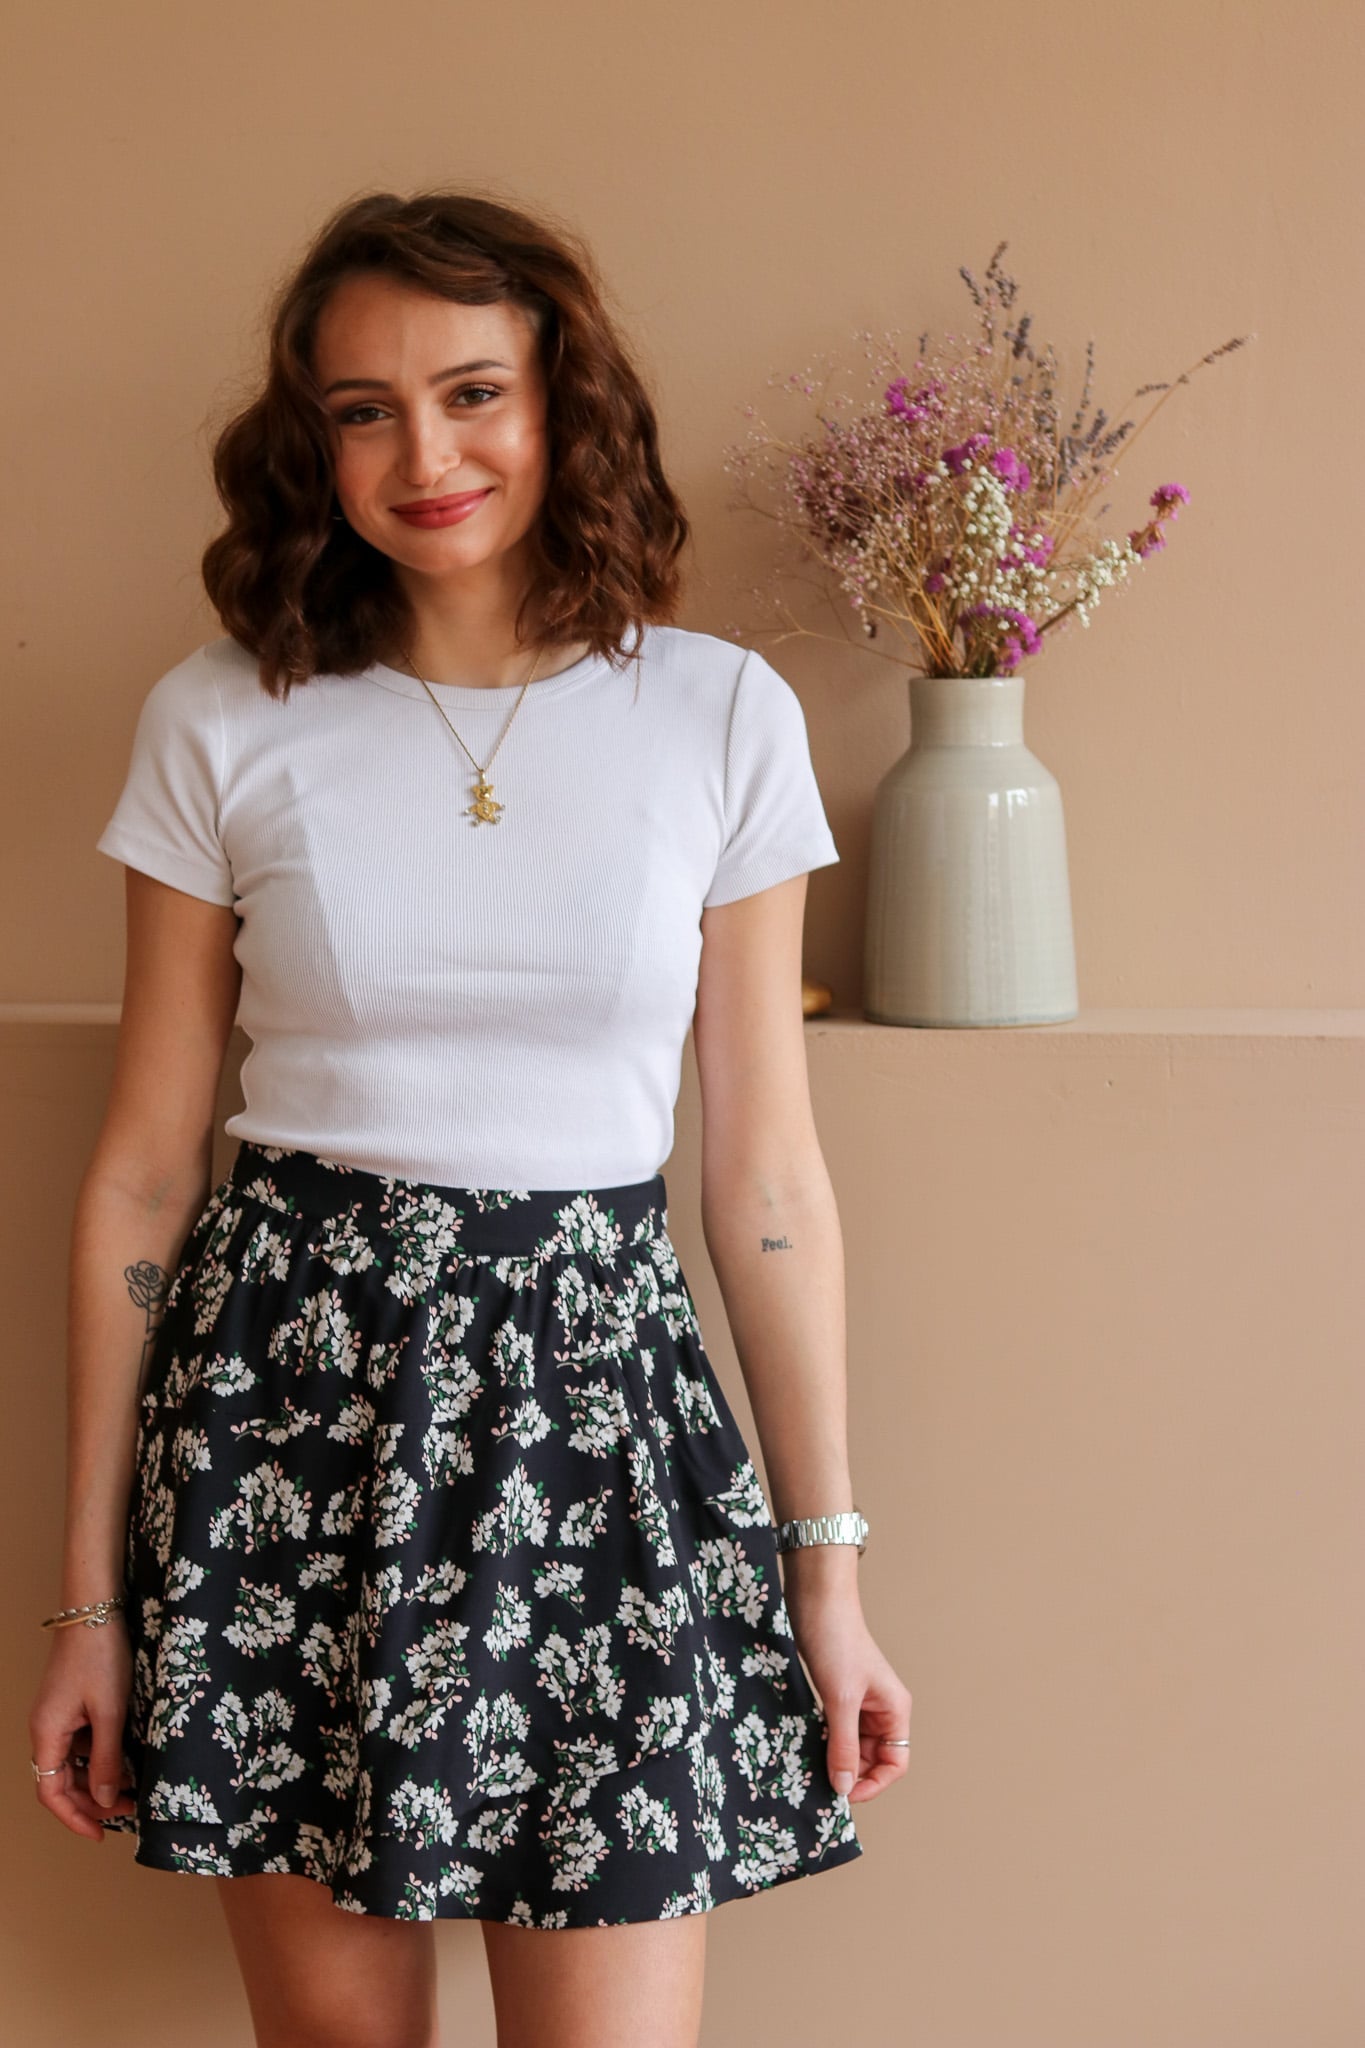 Lise Tailor - Bliss Skirt Sewing Pattern